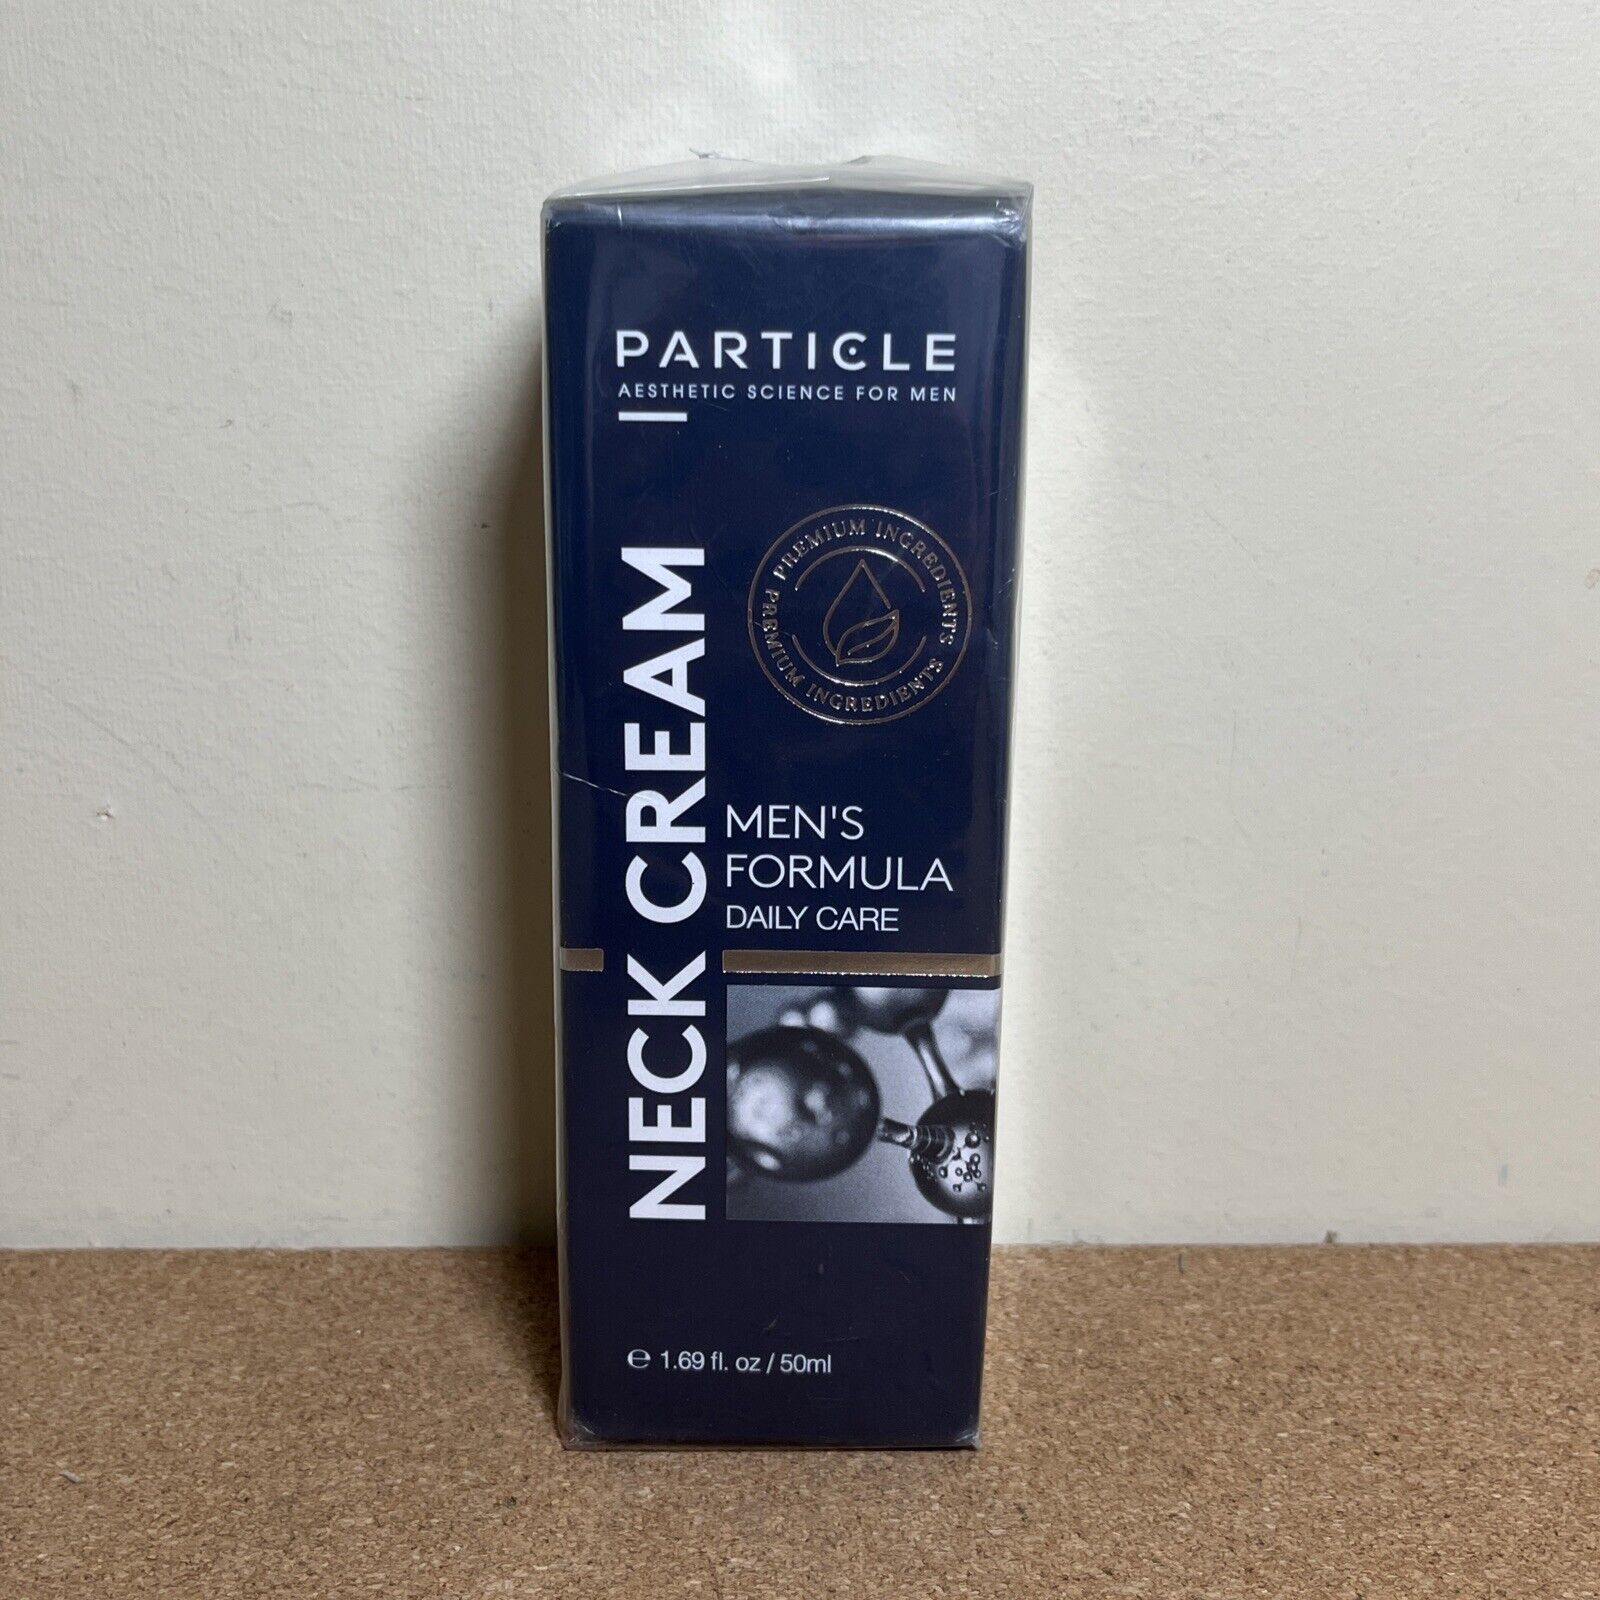 Particle Aesthetic Science For Men Neck Cream Men's Formula Daily Care 1.69 oz.